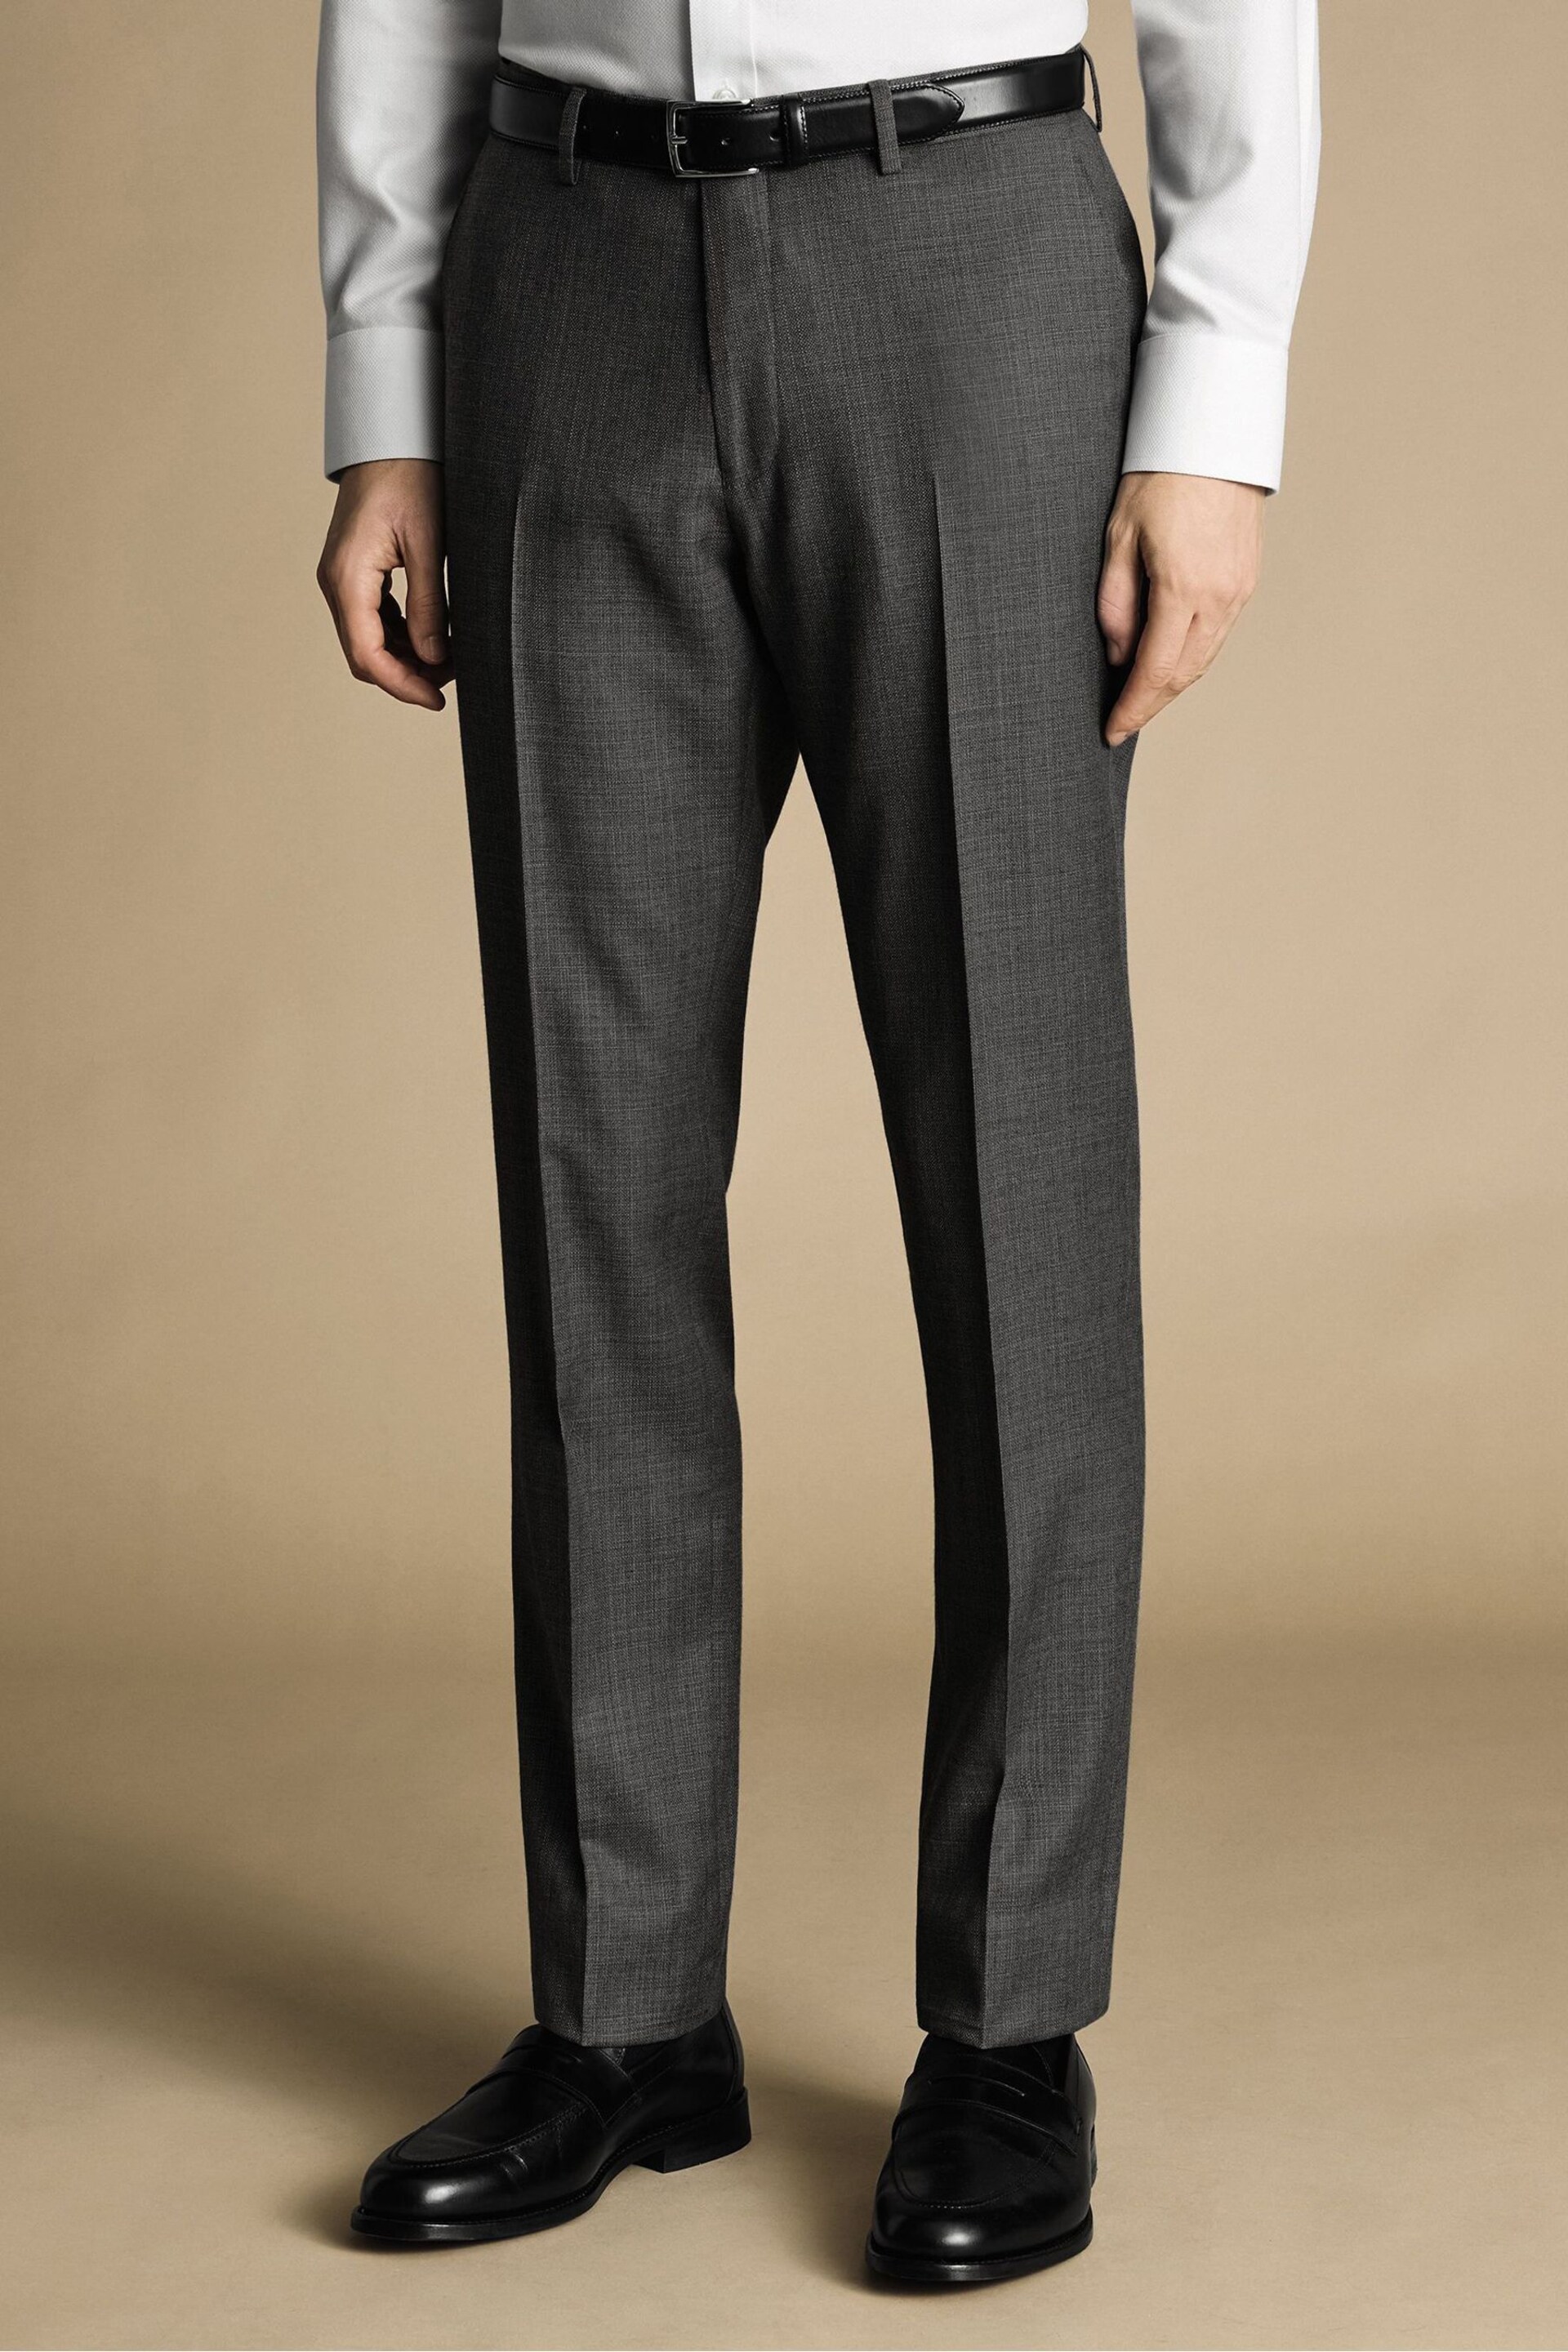 Charles Tyrwhitt Grey Slim Fit Italian Luxury Suit: Trousers - Image 2 of 4